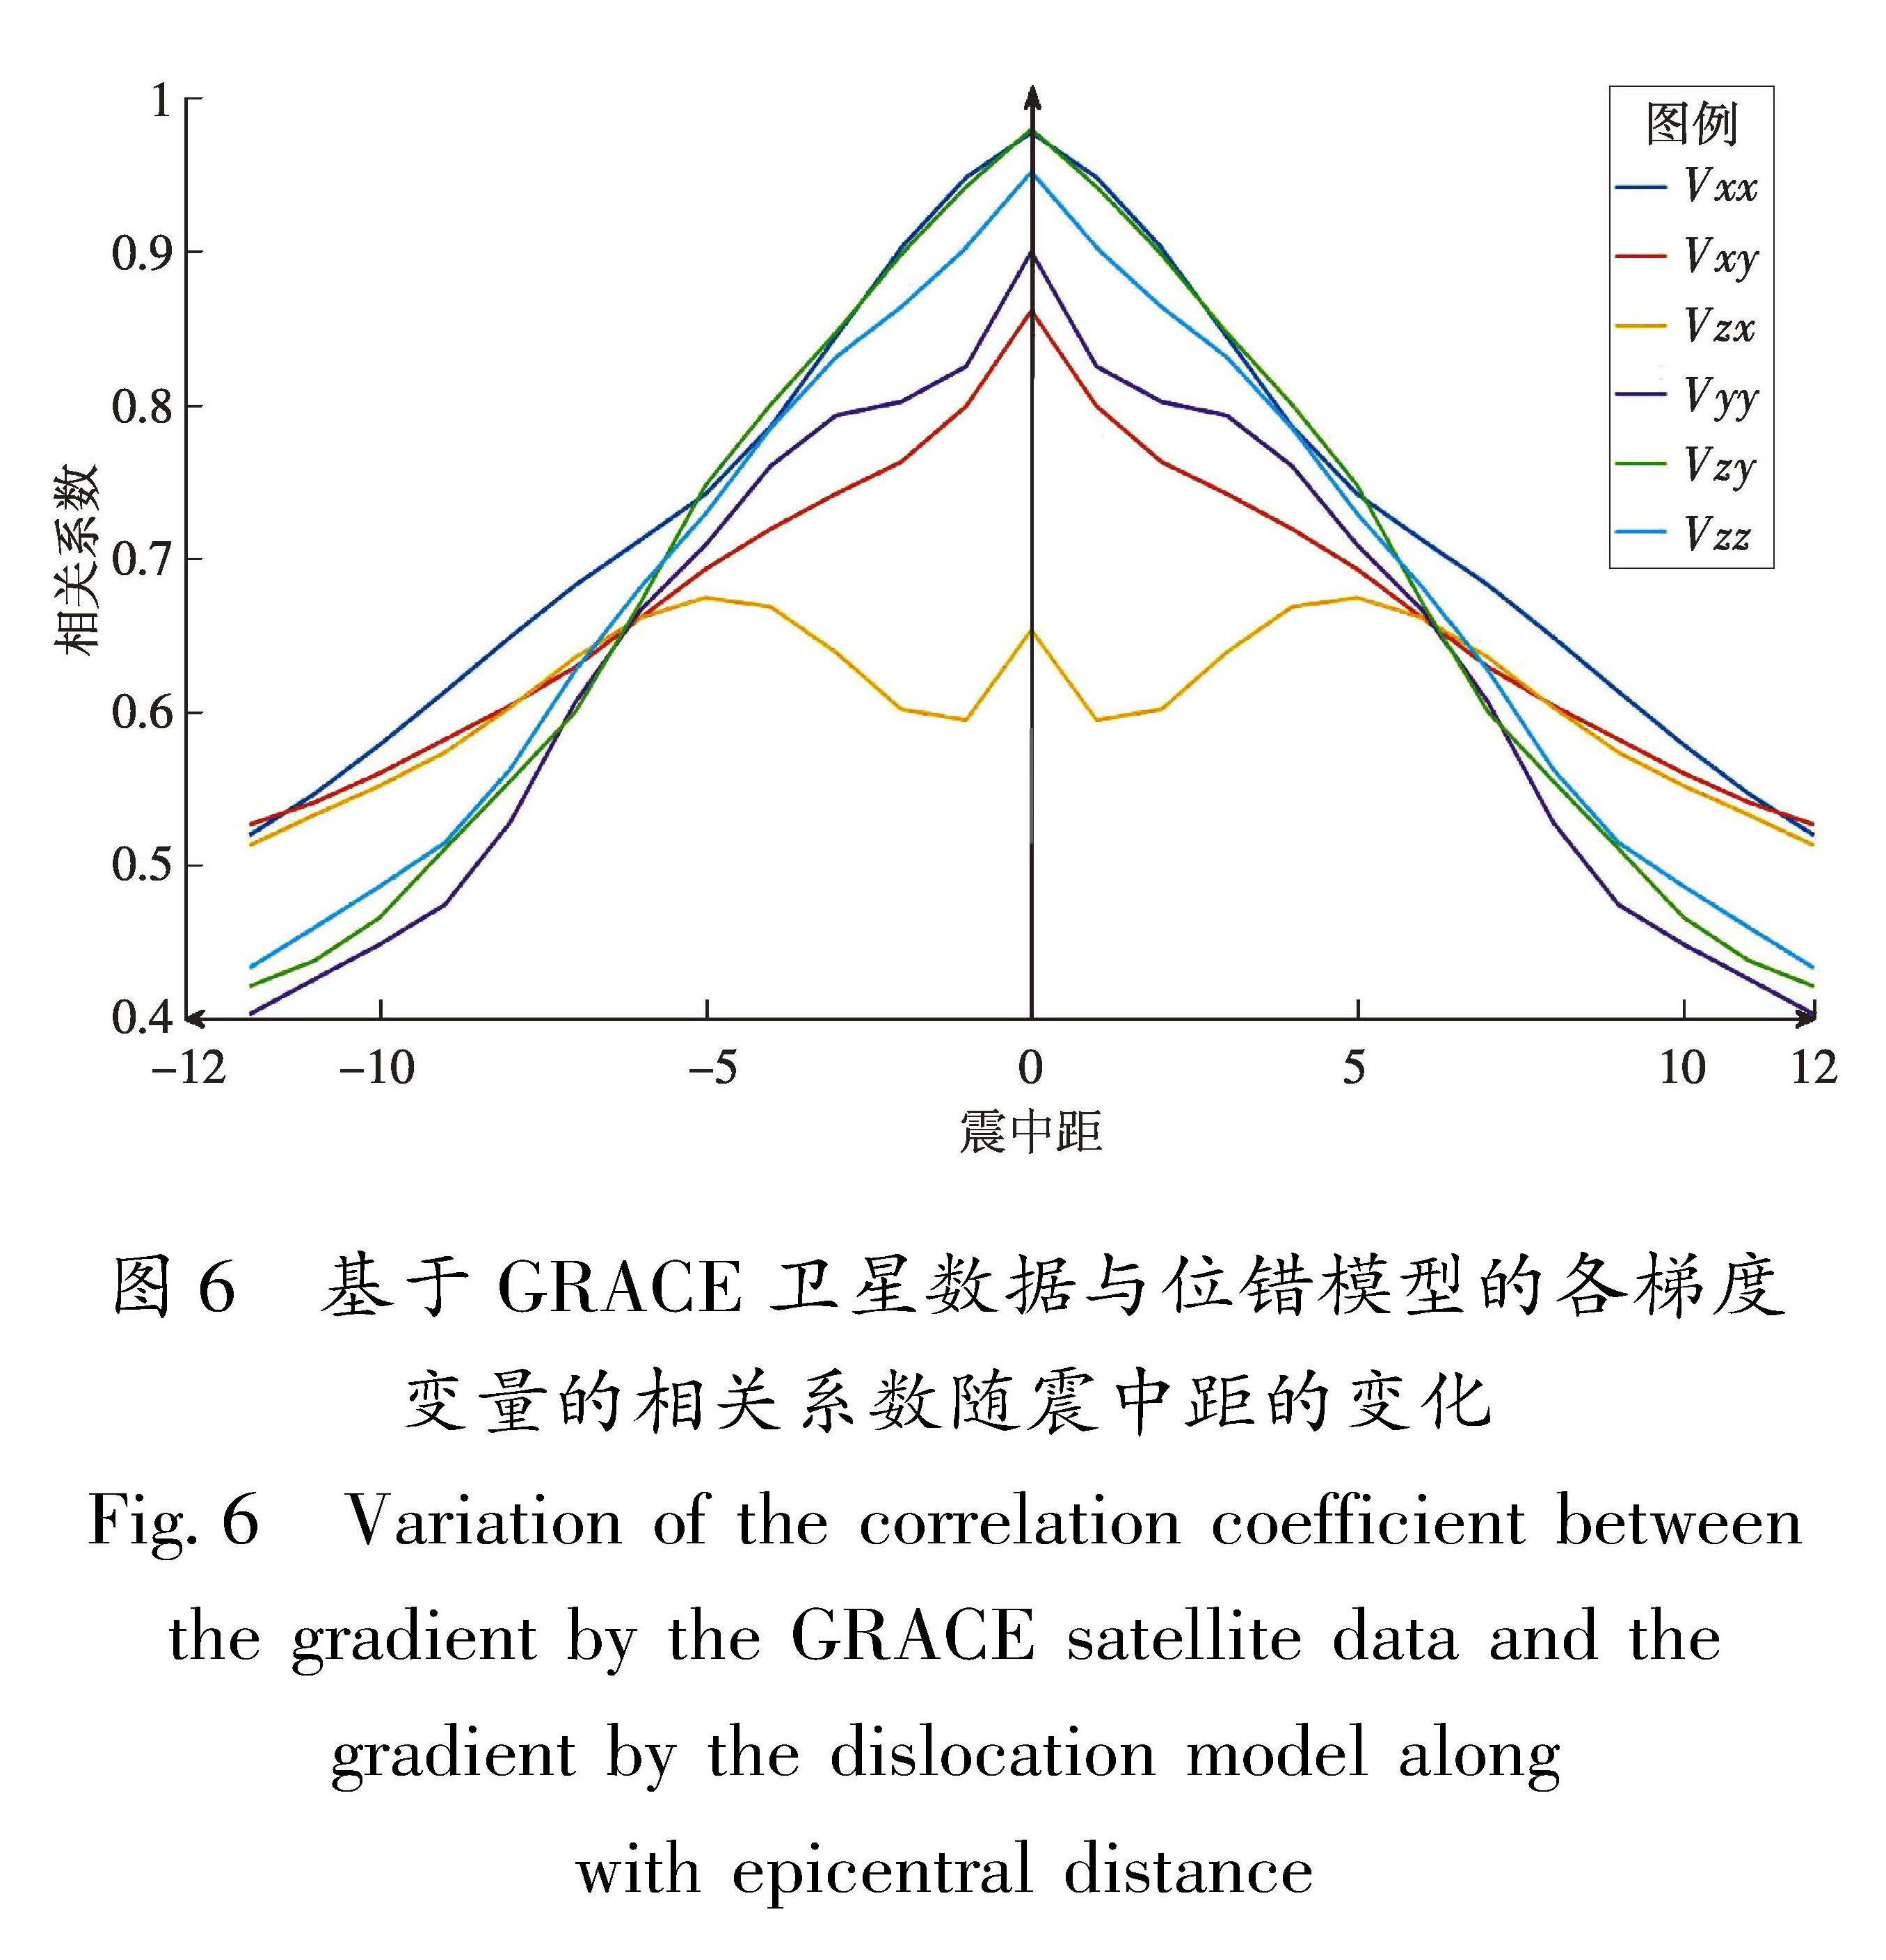 图6 基于GRACE卫星数据与位错模型的各梯度变量的相关系数随震中距的变化<br/>Fig.6 Variation of the correlation coefficient between the gradient by the GRACE satellite data and the gradient by the dislocation model along with epicentral distance